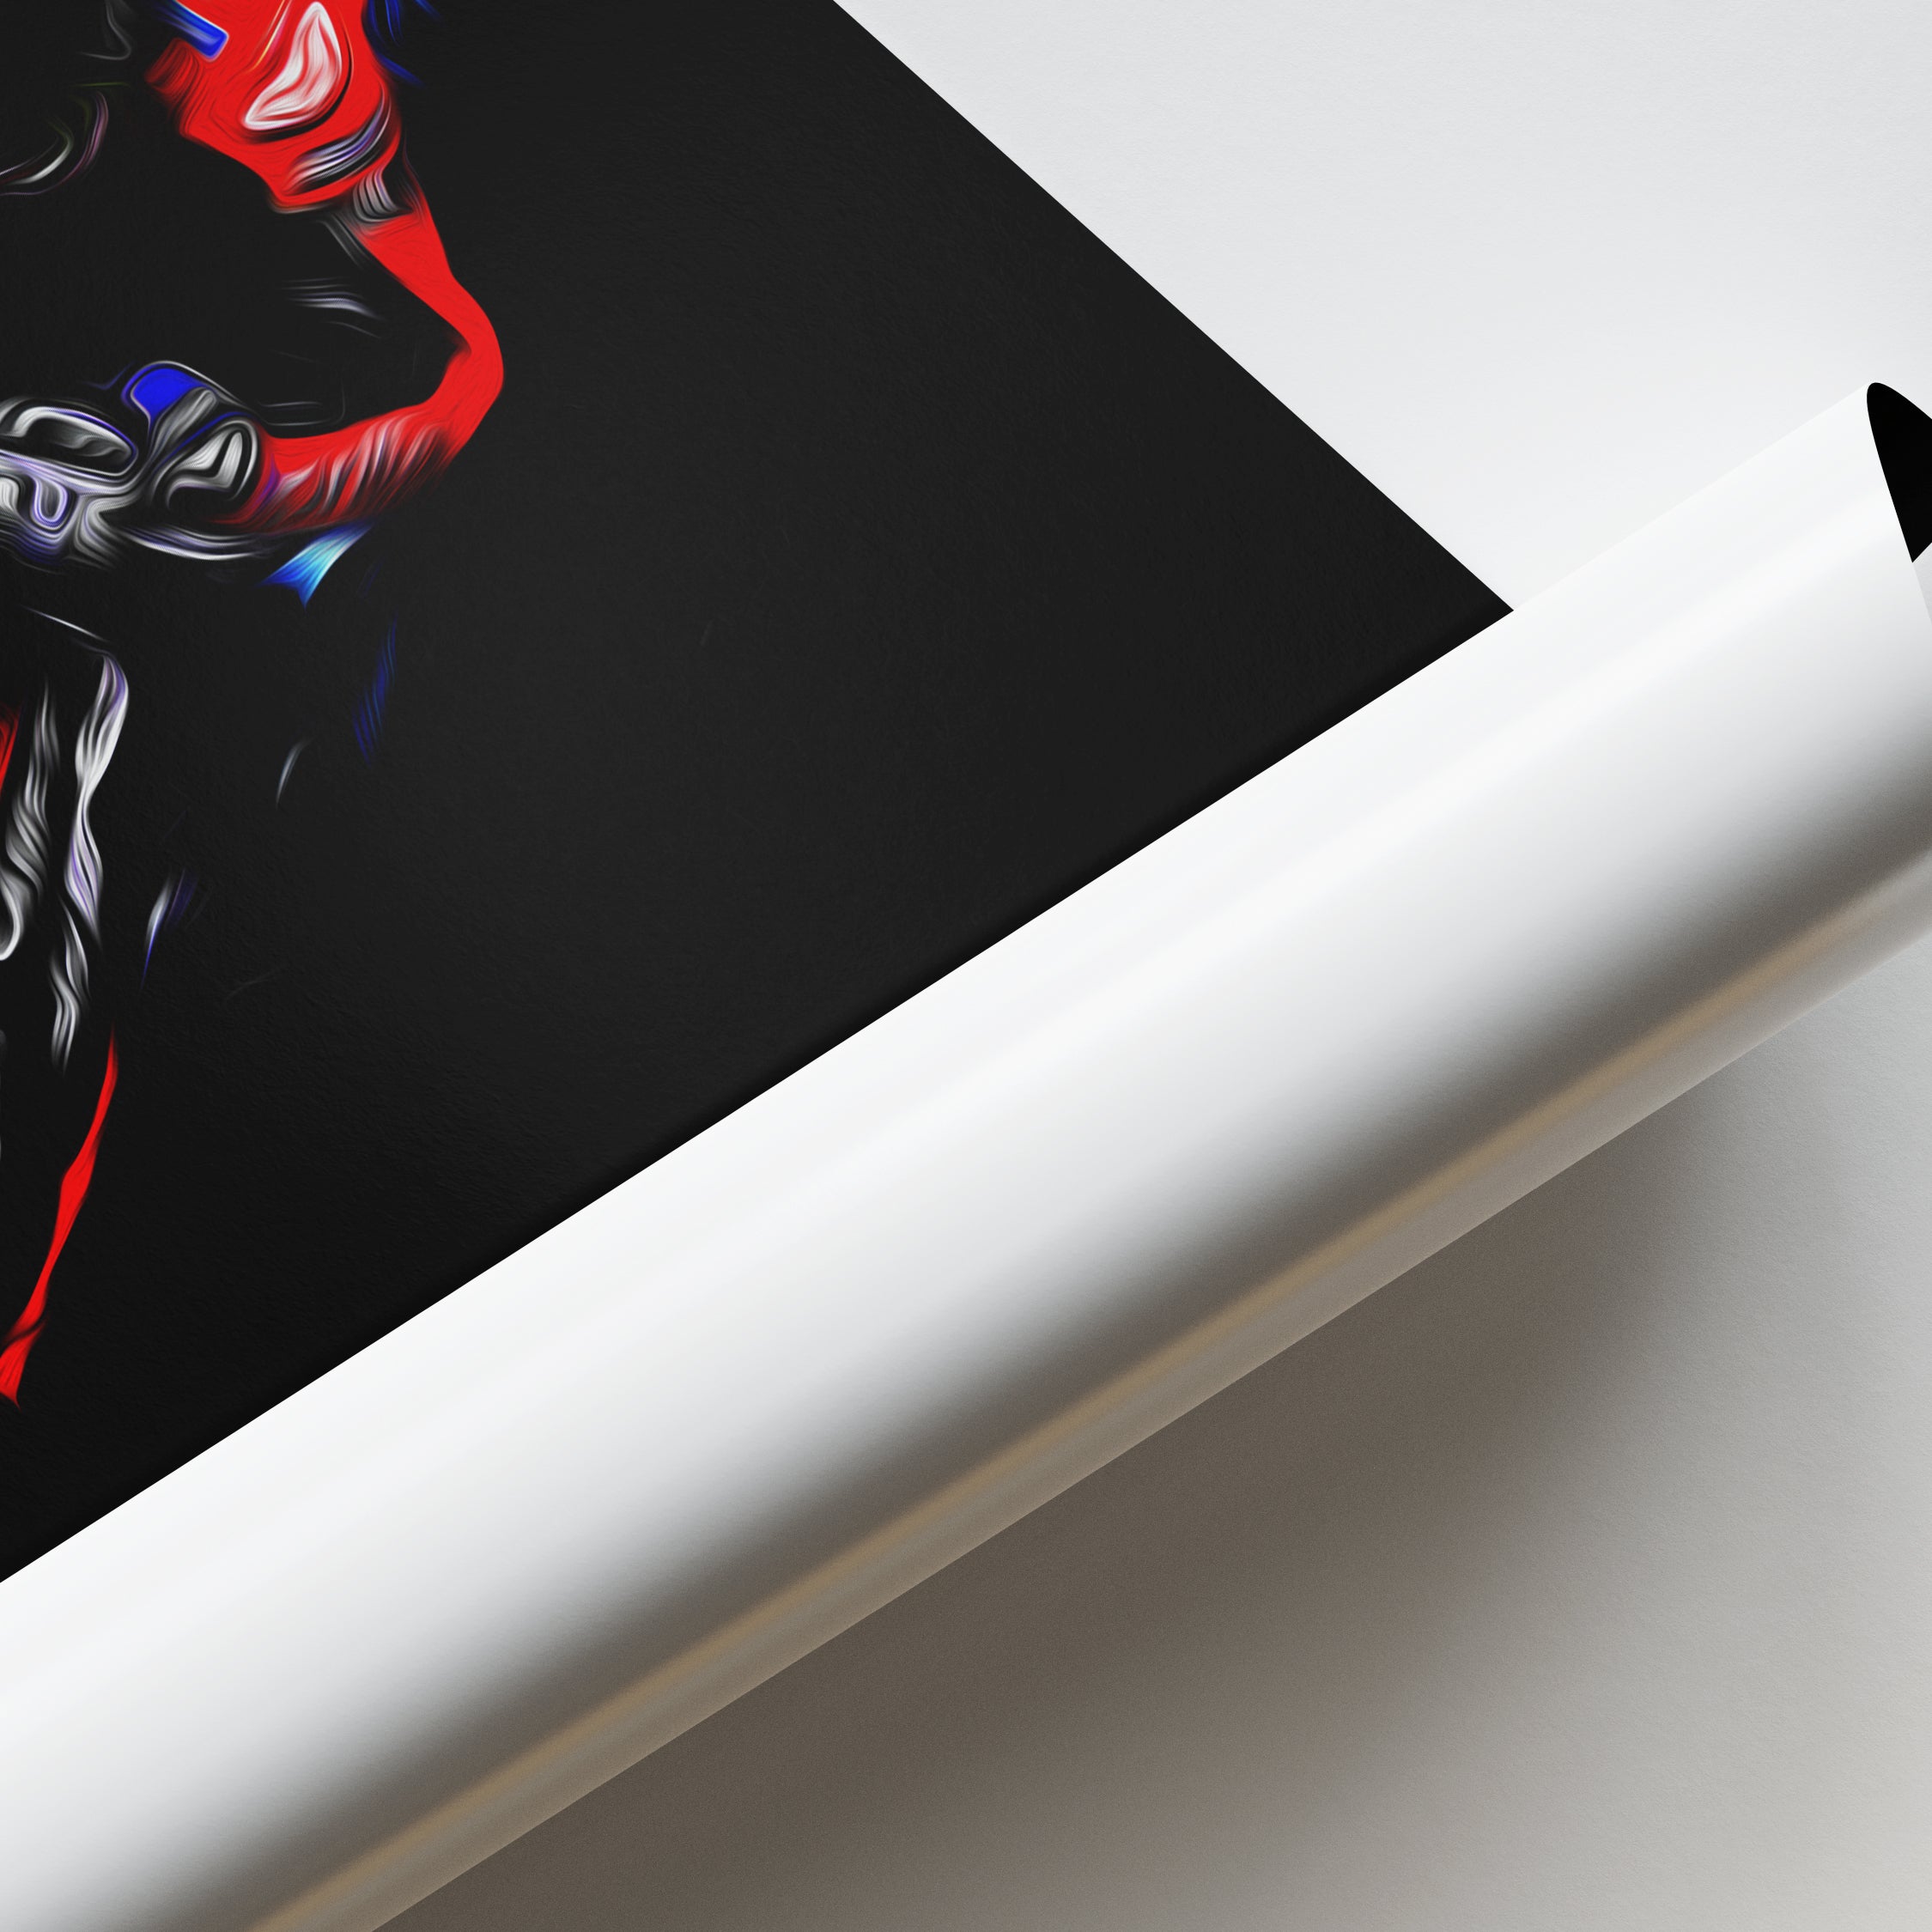 Aprilia RS-GP, Aleix Espargaro 2022 - MotoGP Print